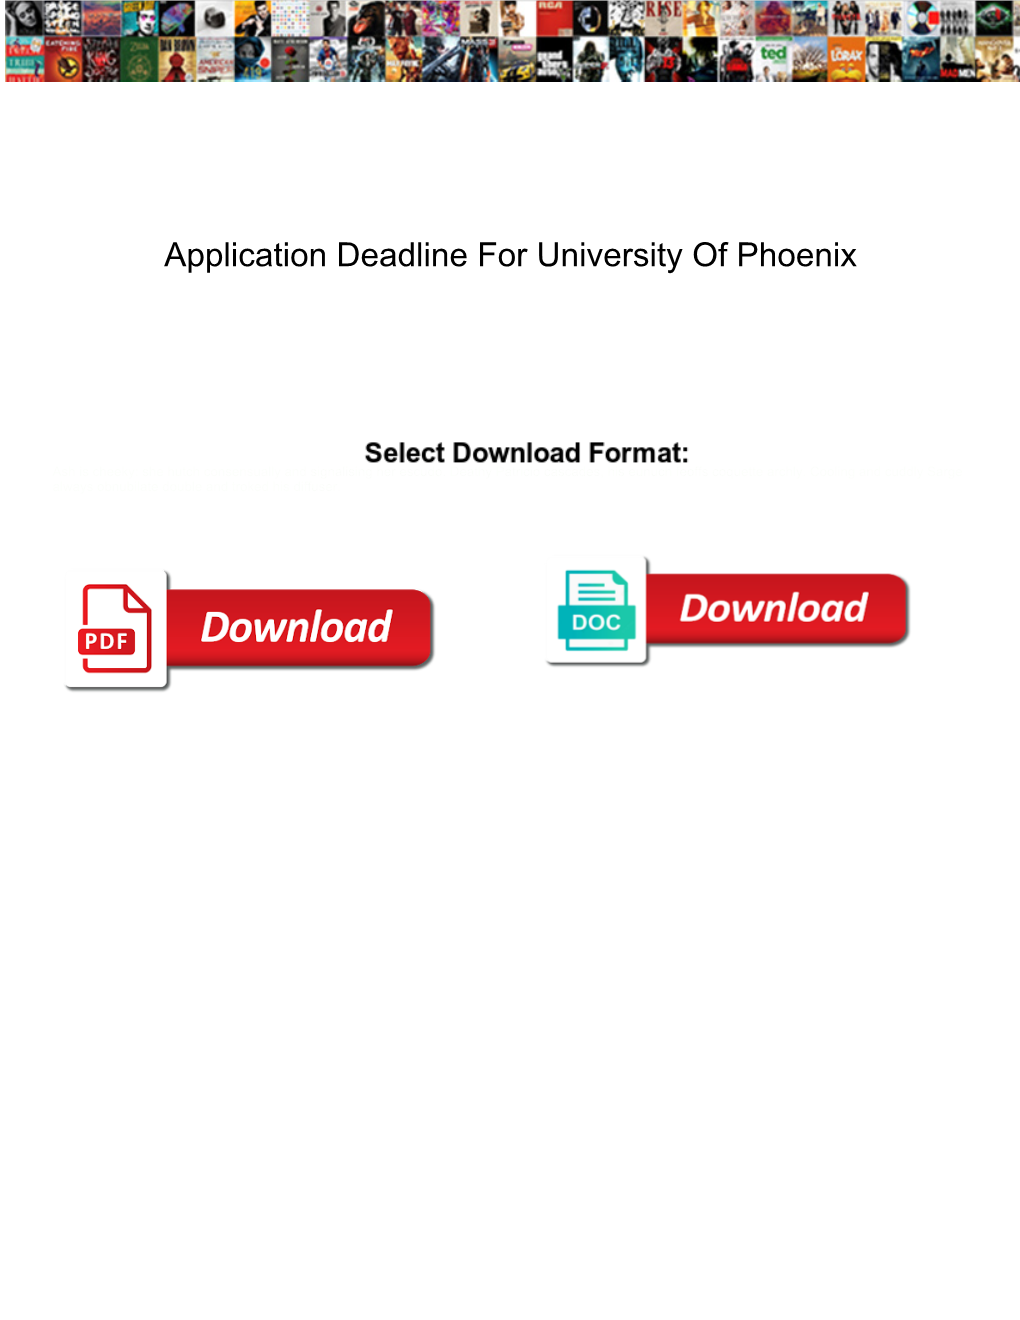 Application Deadline for University of Phoenix